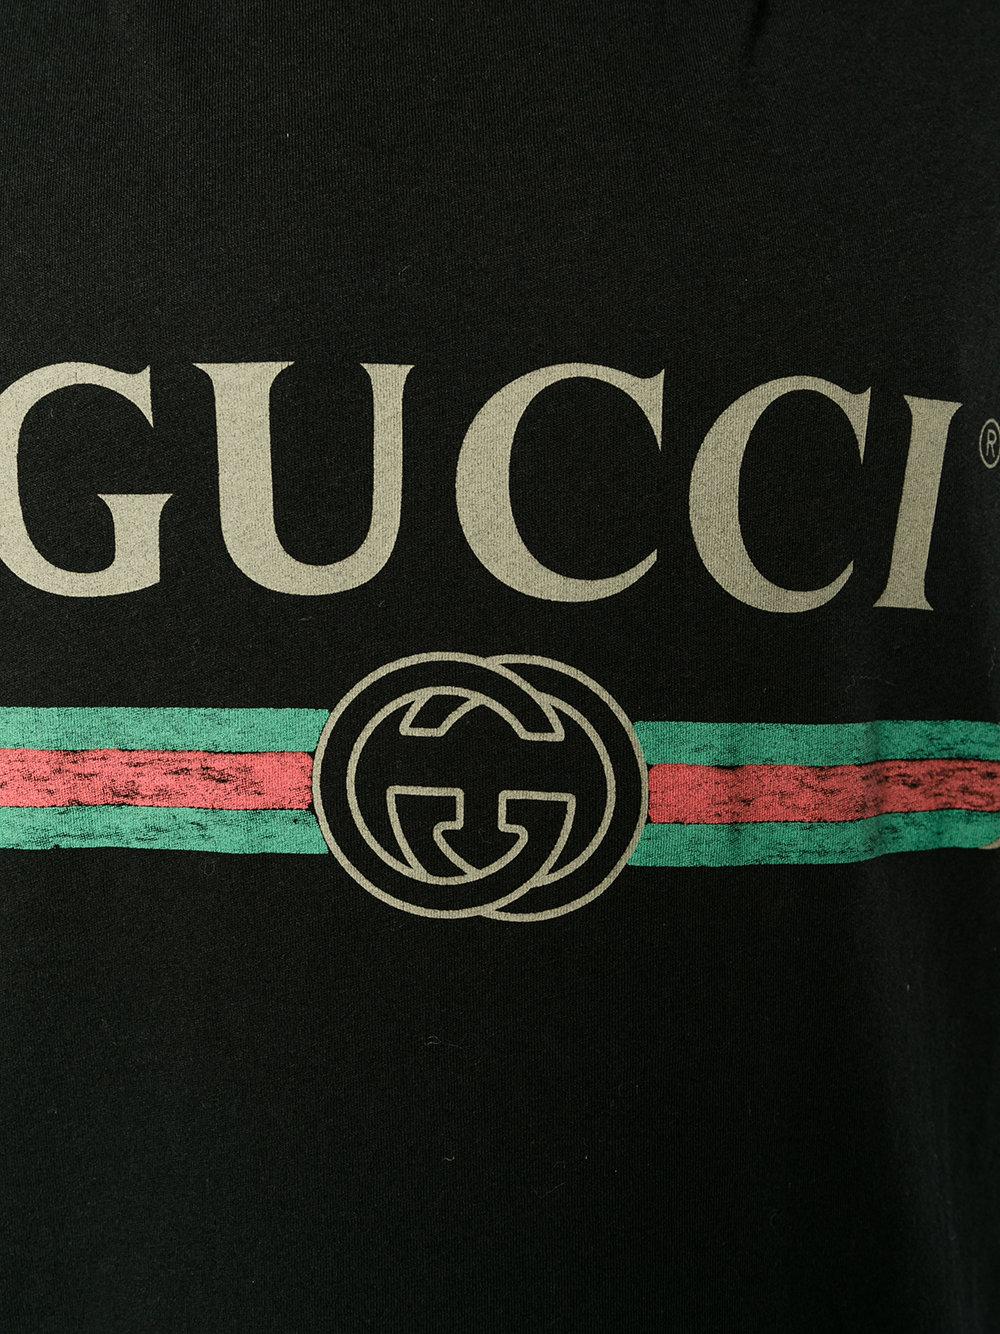 Gucci Logo Posters | Ville du Muy